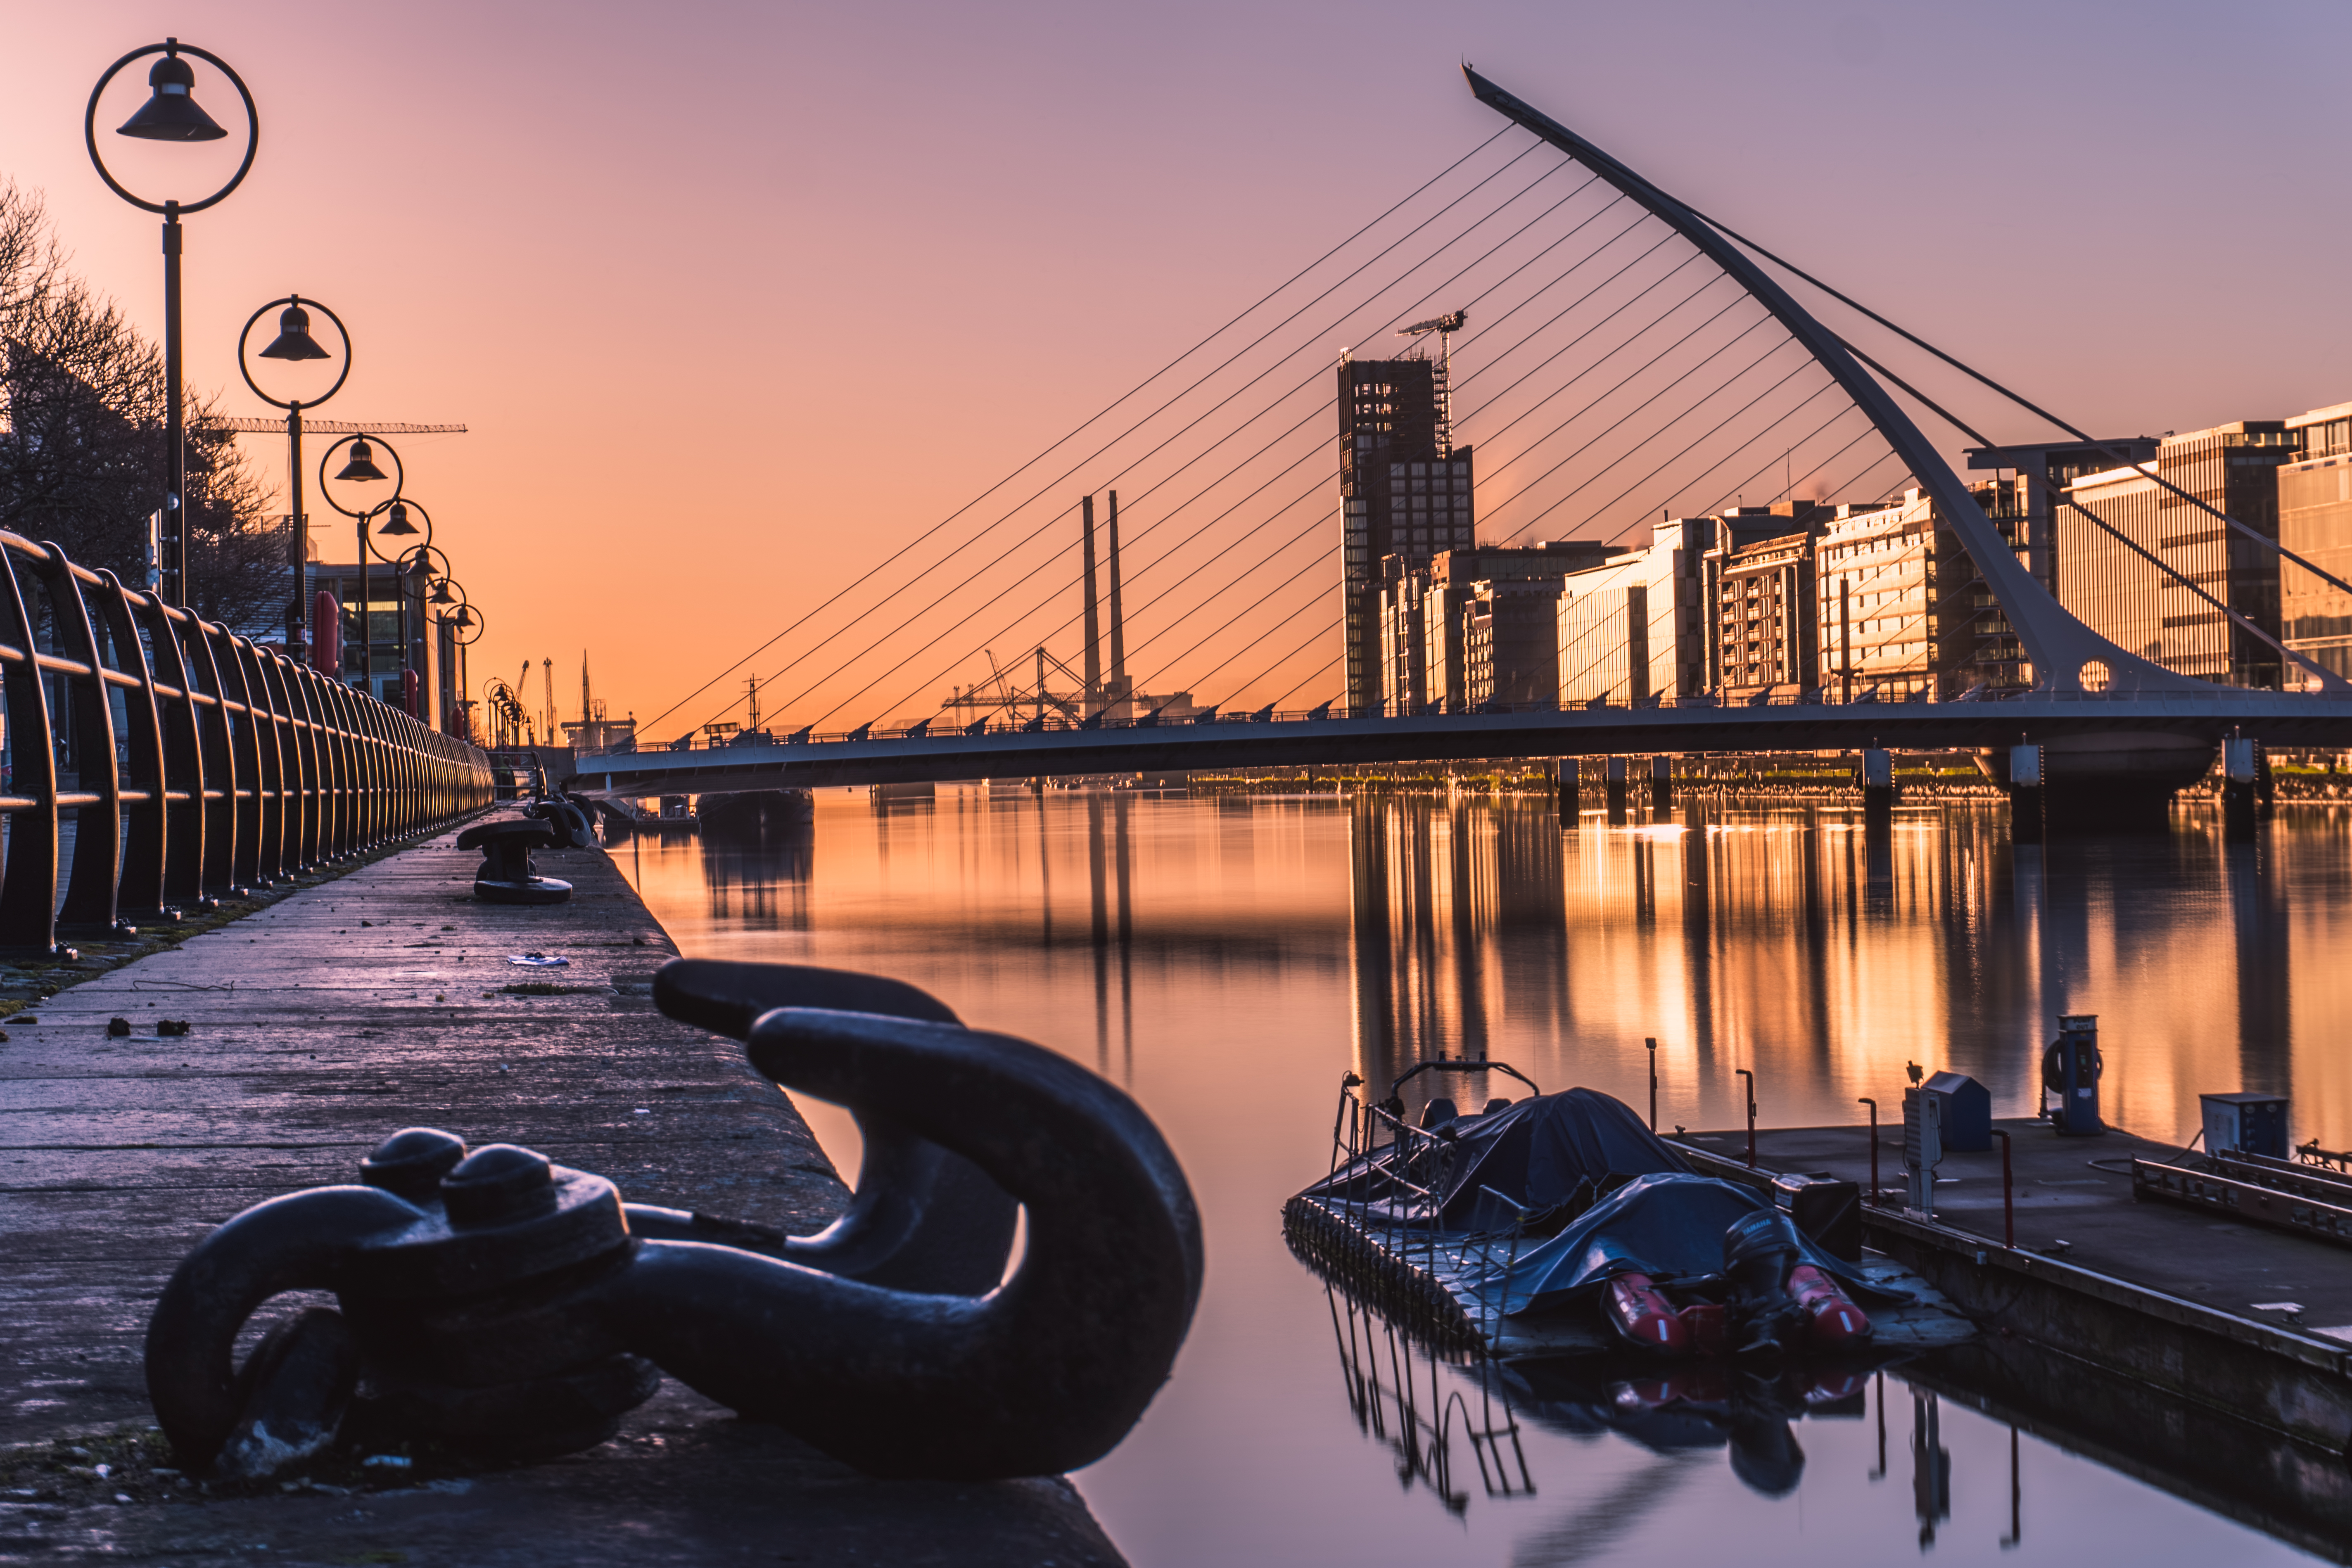 Dublin at sunset